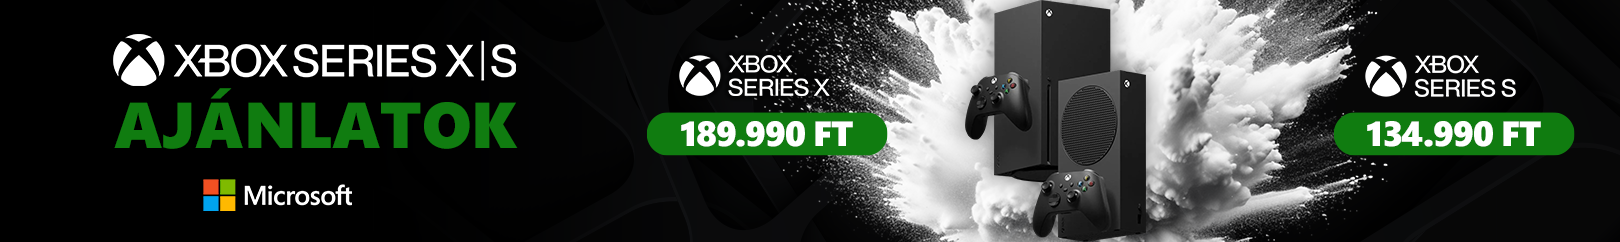 Xbox Series kuponajánlat